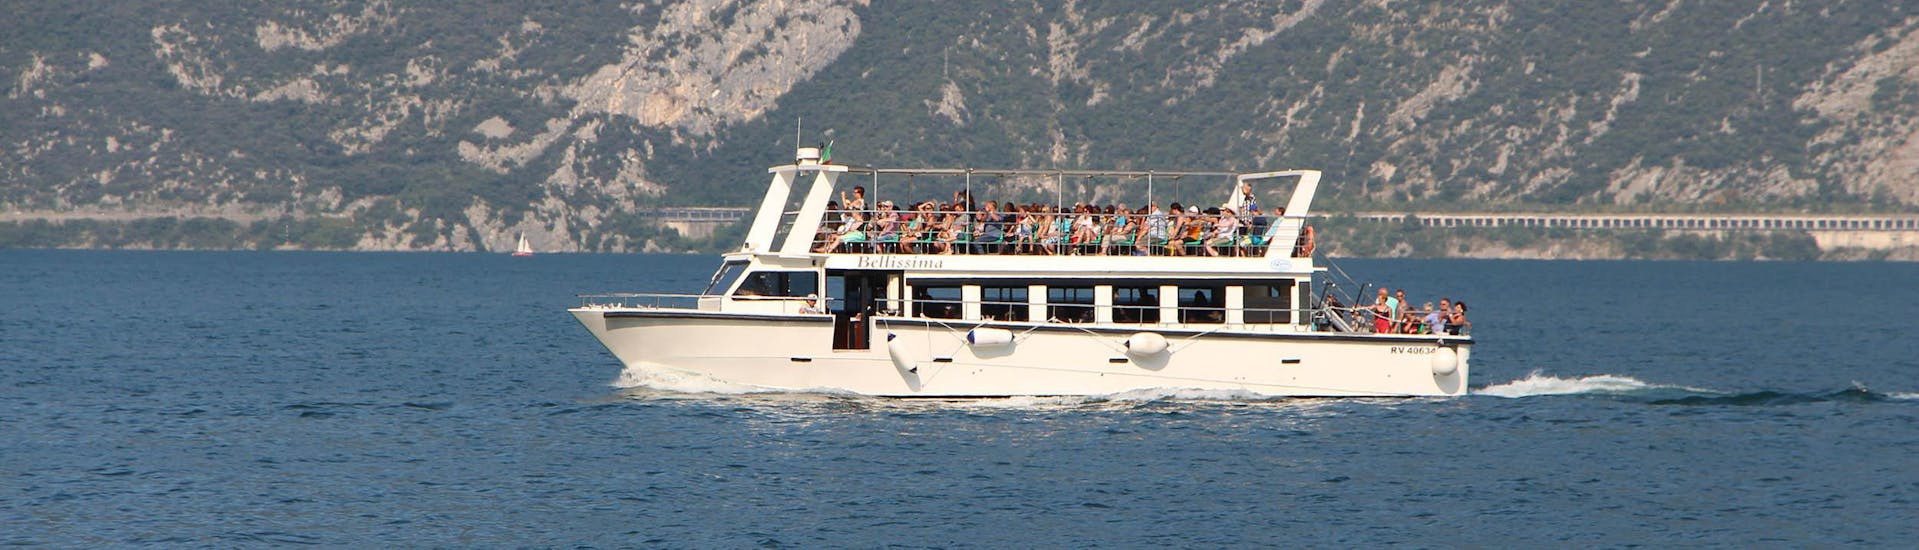 The boat of Garda Escursioni during a trip on lake Garda.